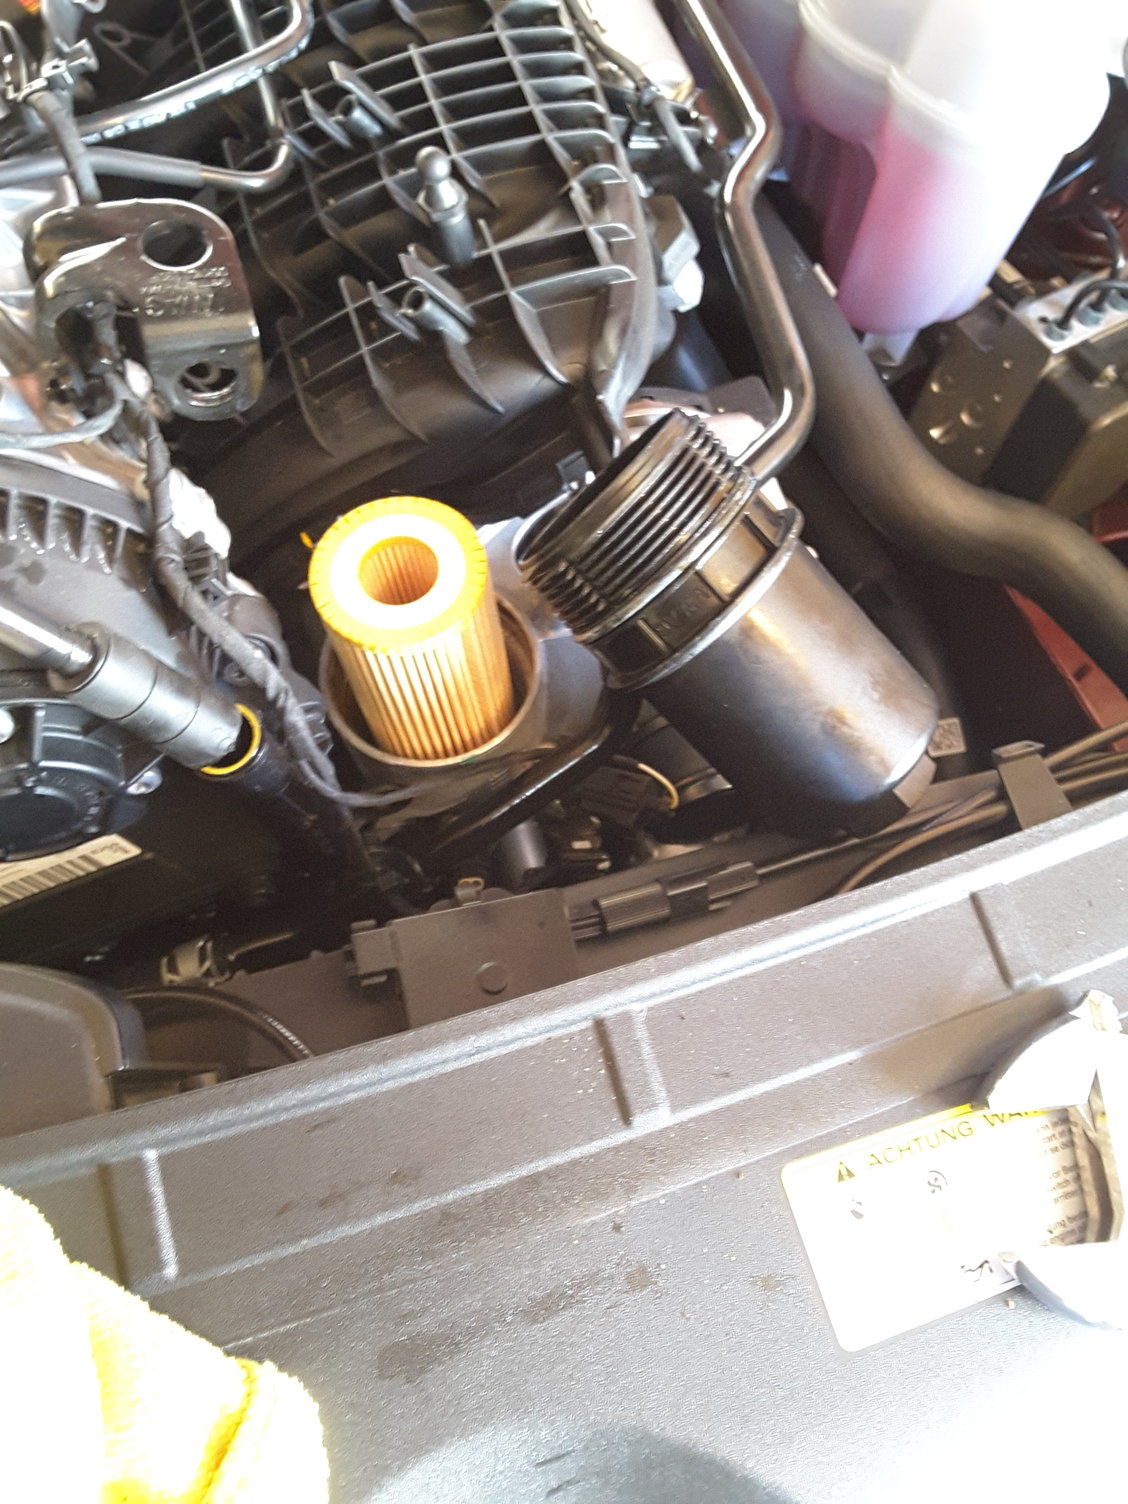 Audi A4 A4Q Volkswagen Passat Oil Change Kit Engine Oil Drain Plug Oil Filter